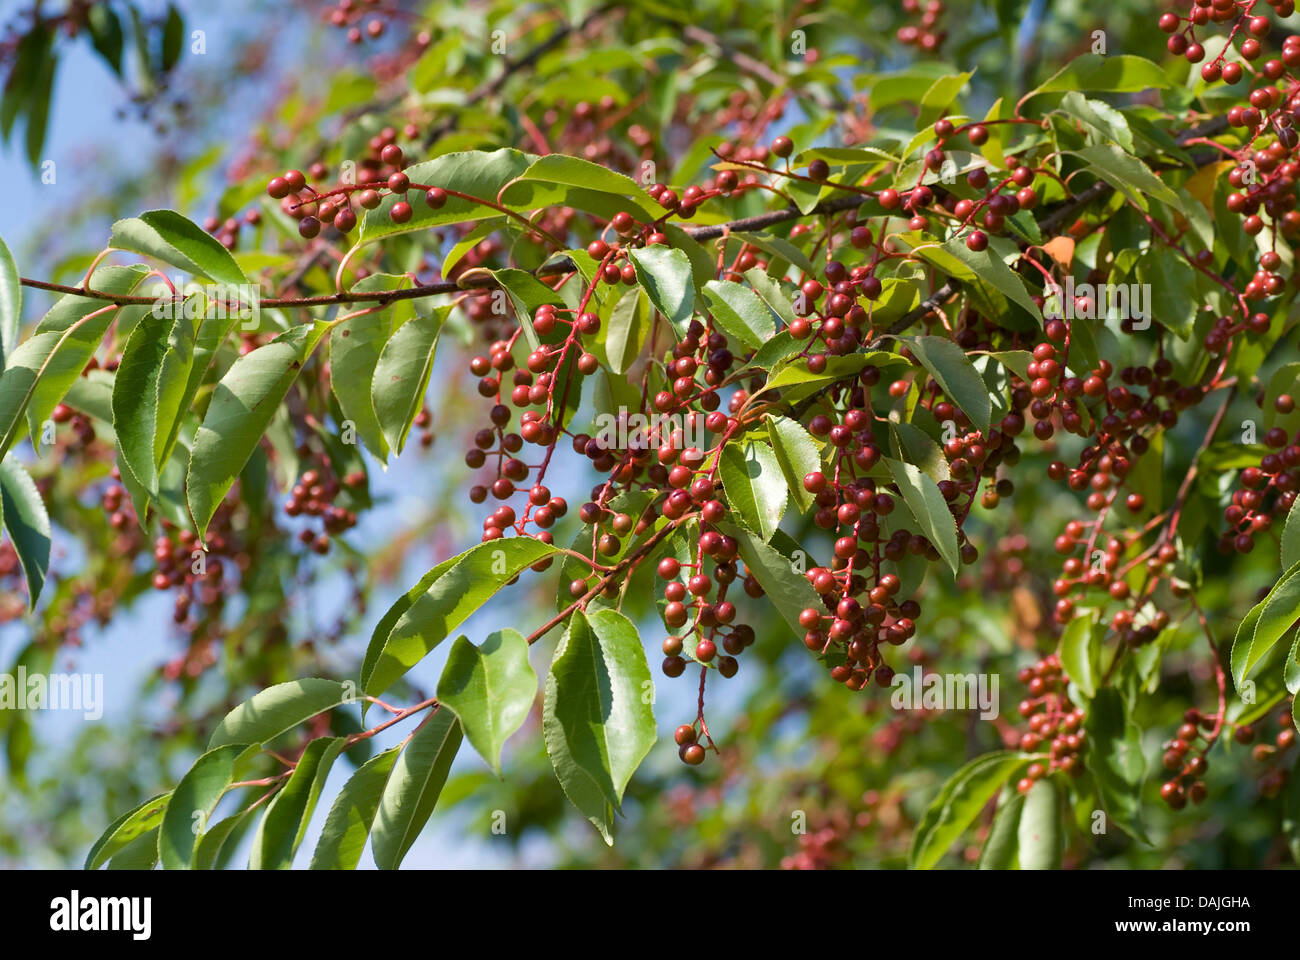 wild black cherry (Prunus serotina), branches with immature fruits, Germany Stock Photo